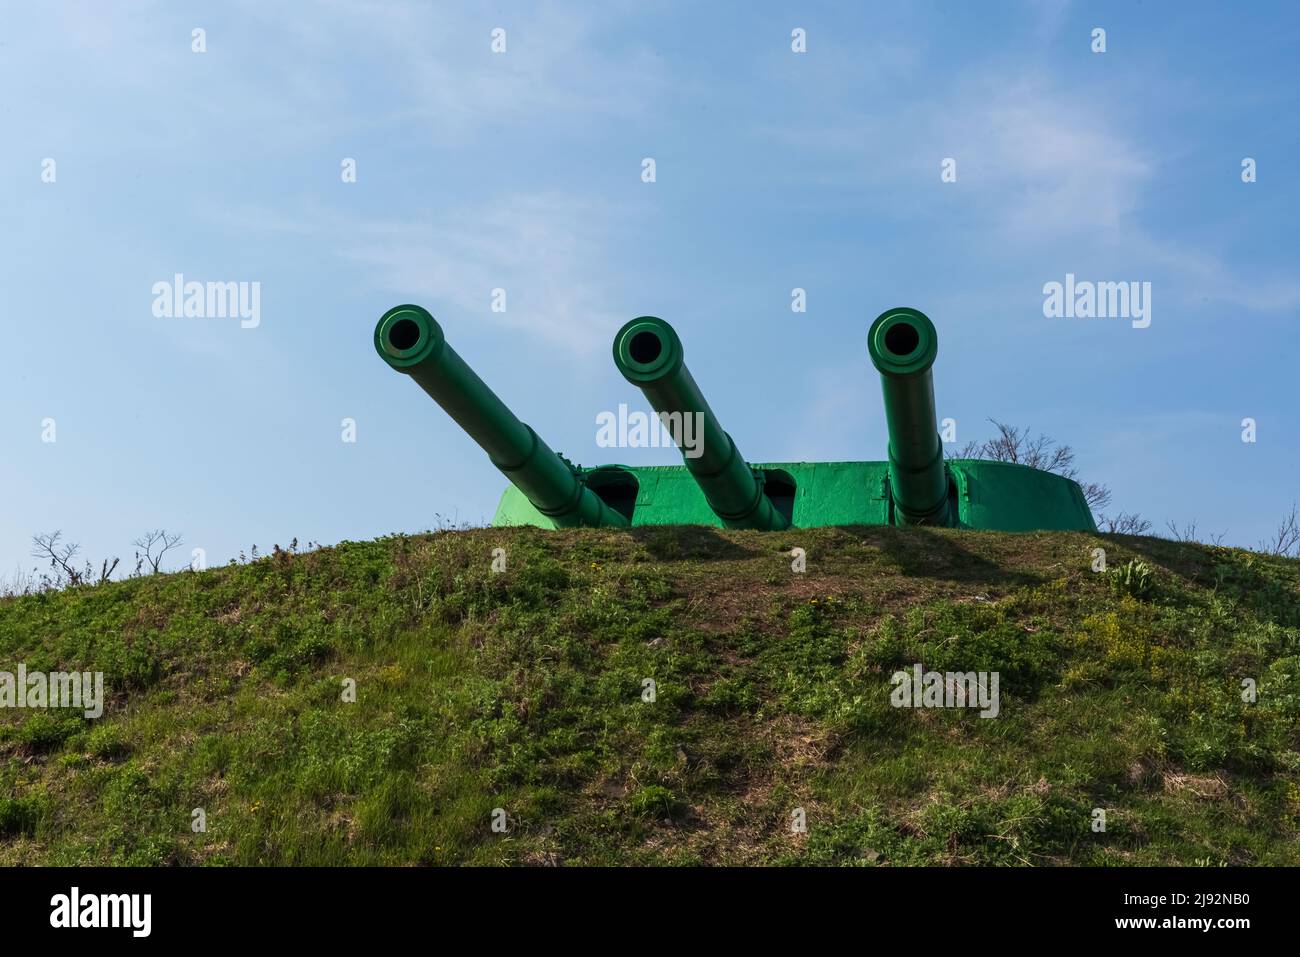 Voroshilov battery - ship tower guns on the Russian island. High quality photo Stock Photo